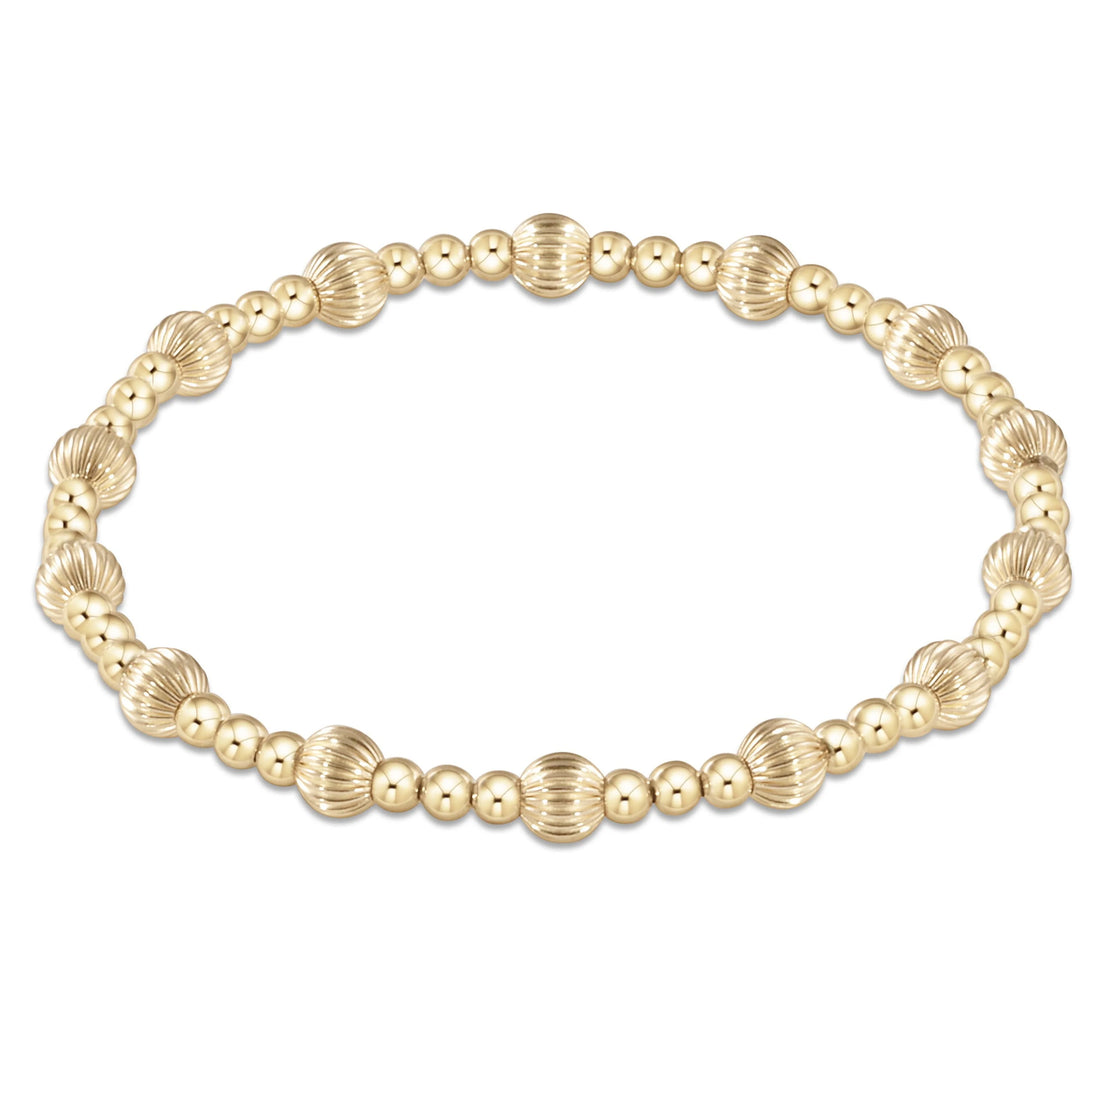 Dignity Sincerity Pattern 5mm Bead Bracelet Gold